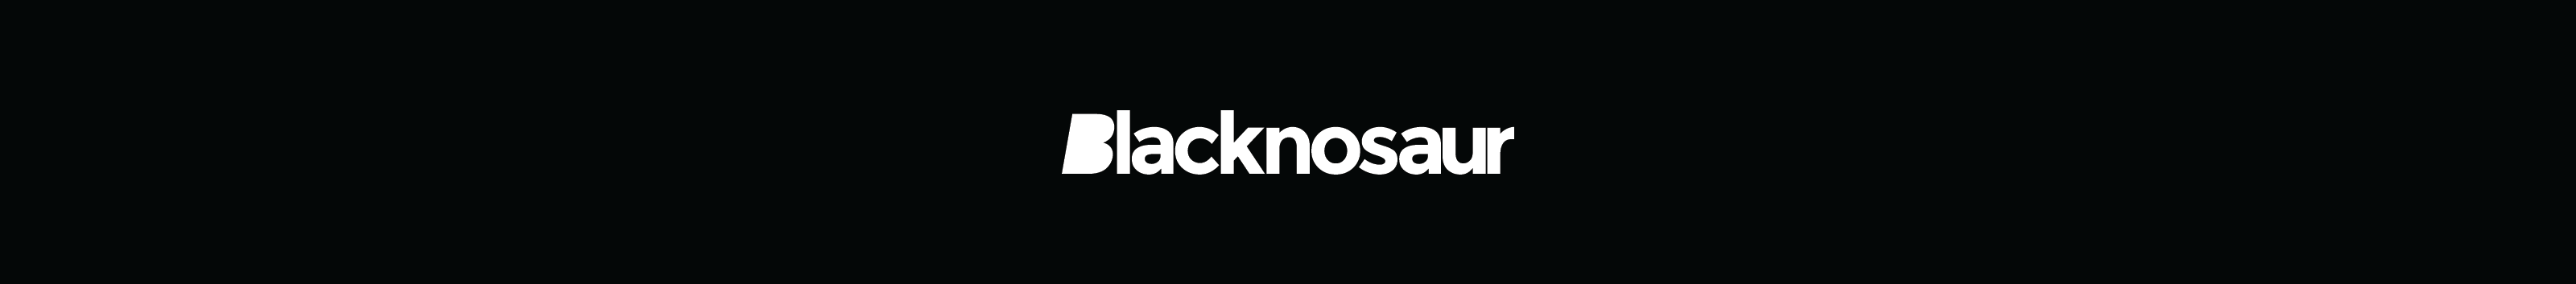 Blacknosaur 🦖's profile banner